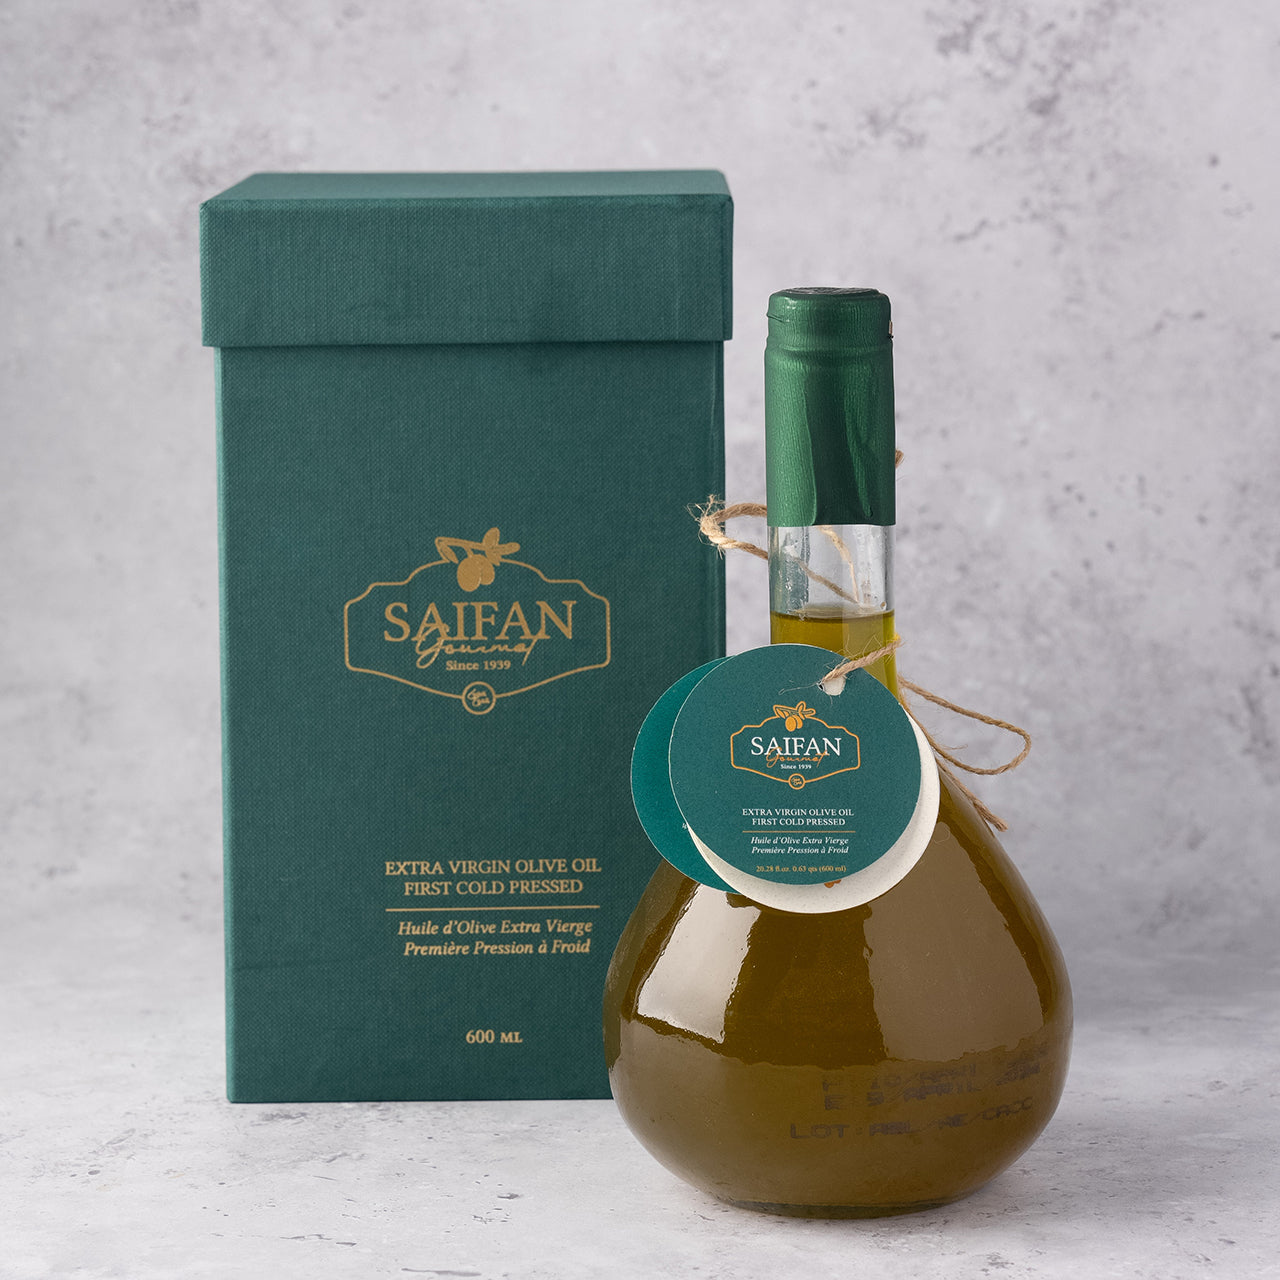 Saifan Extra Virgin Olive Oil Gift Box